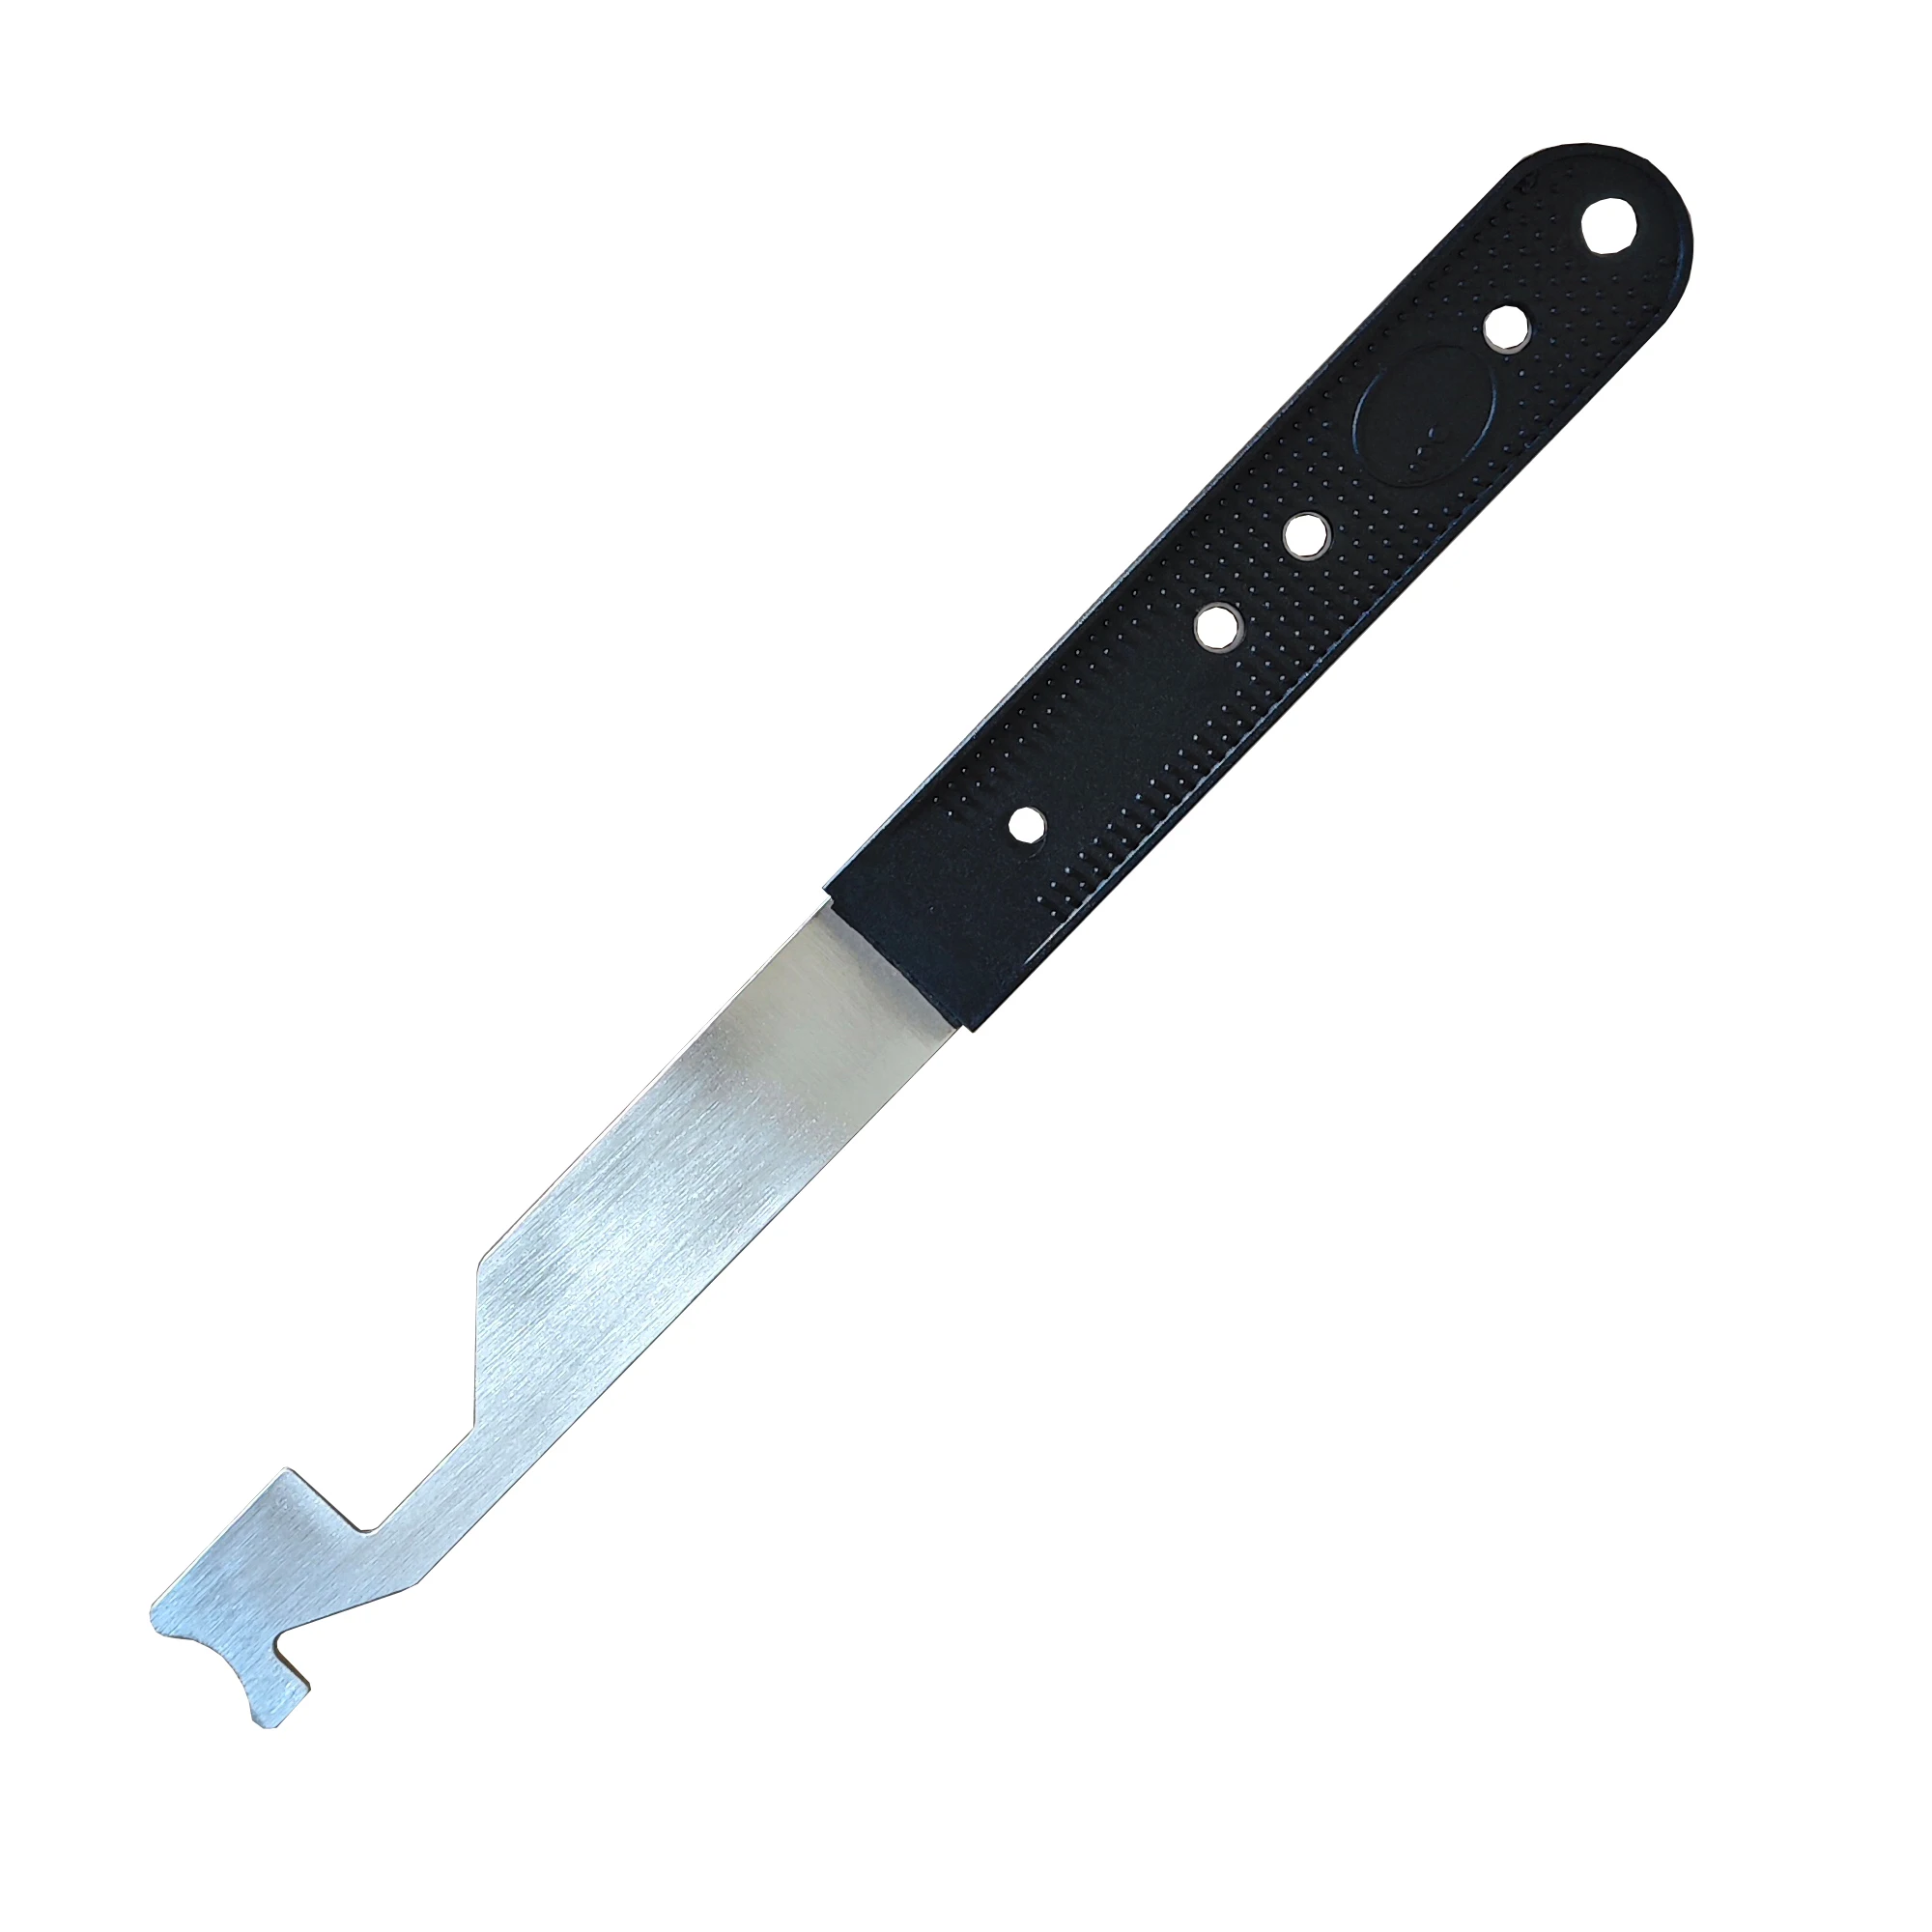 Shove knife, Multi functional Slim Jim , Length: 8.66